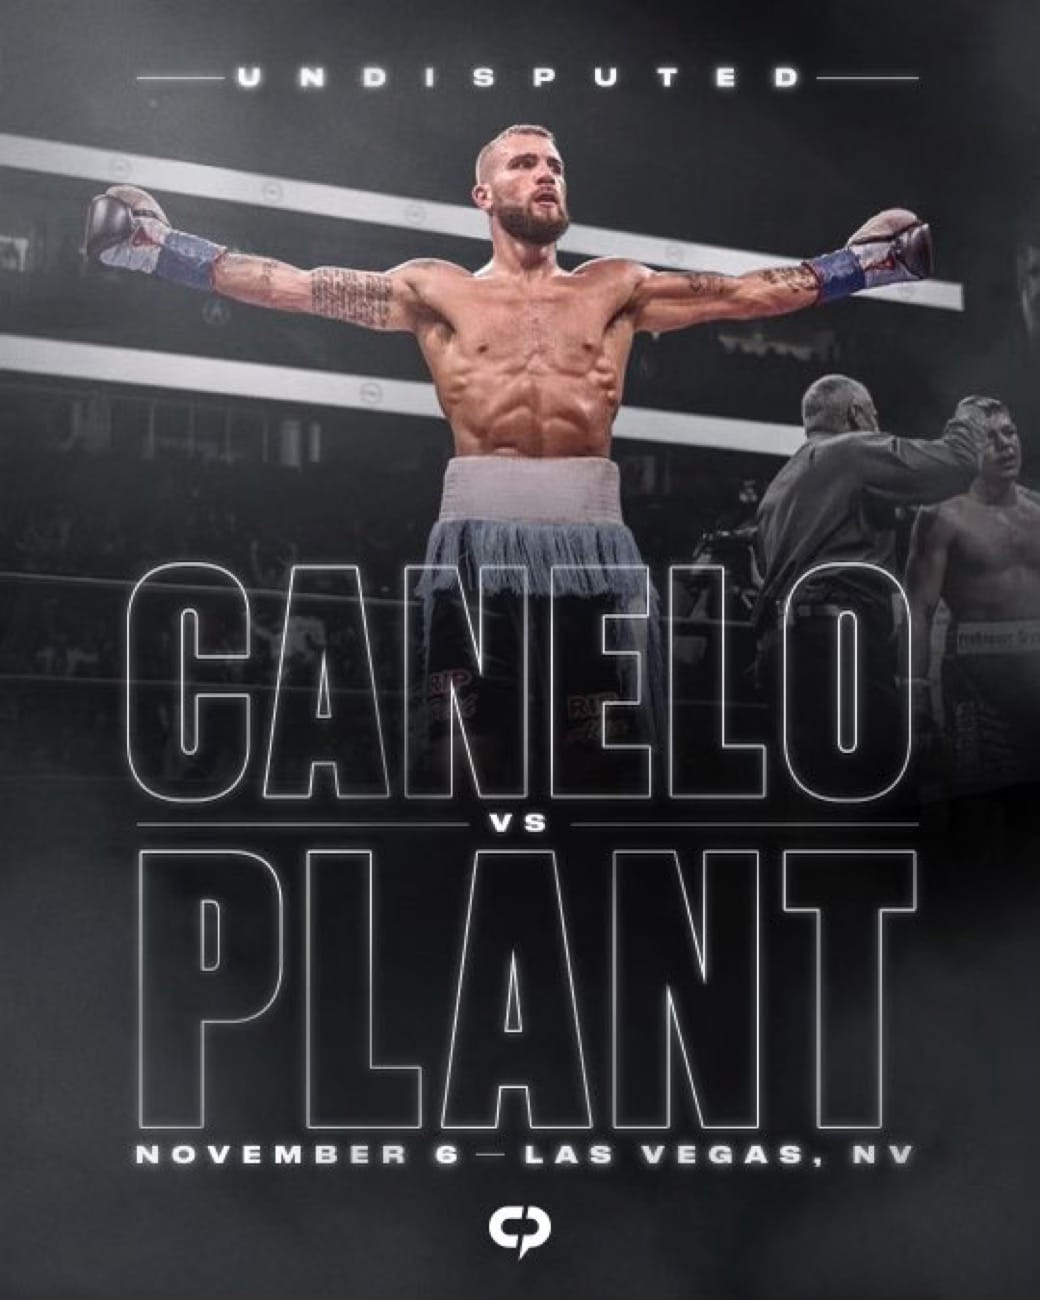 Caleb Plant, Canelo Alvarez boxing photo